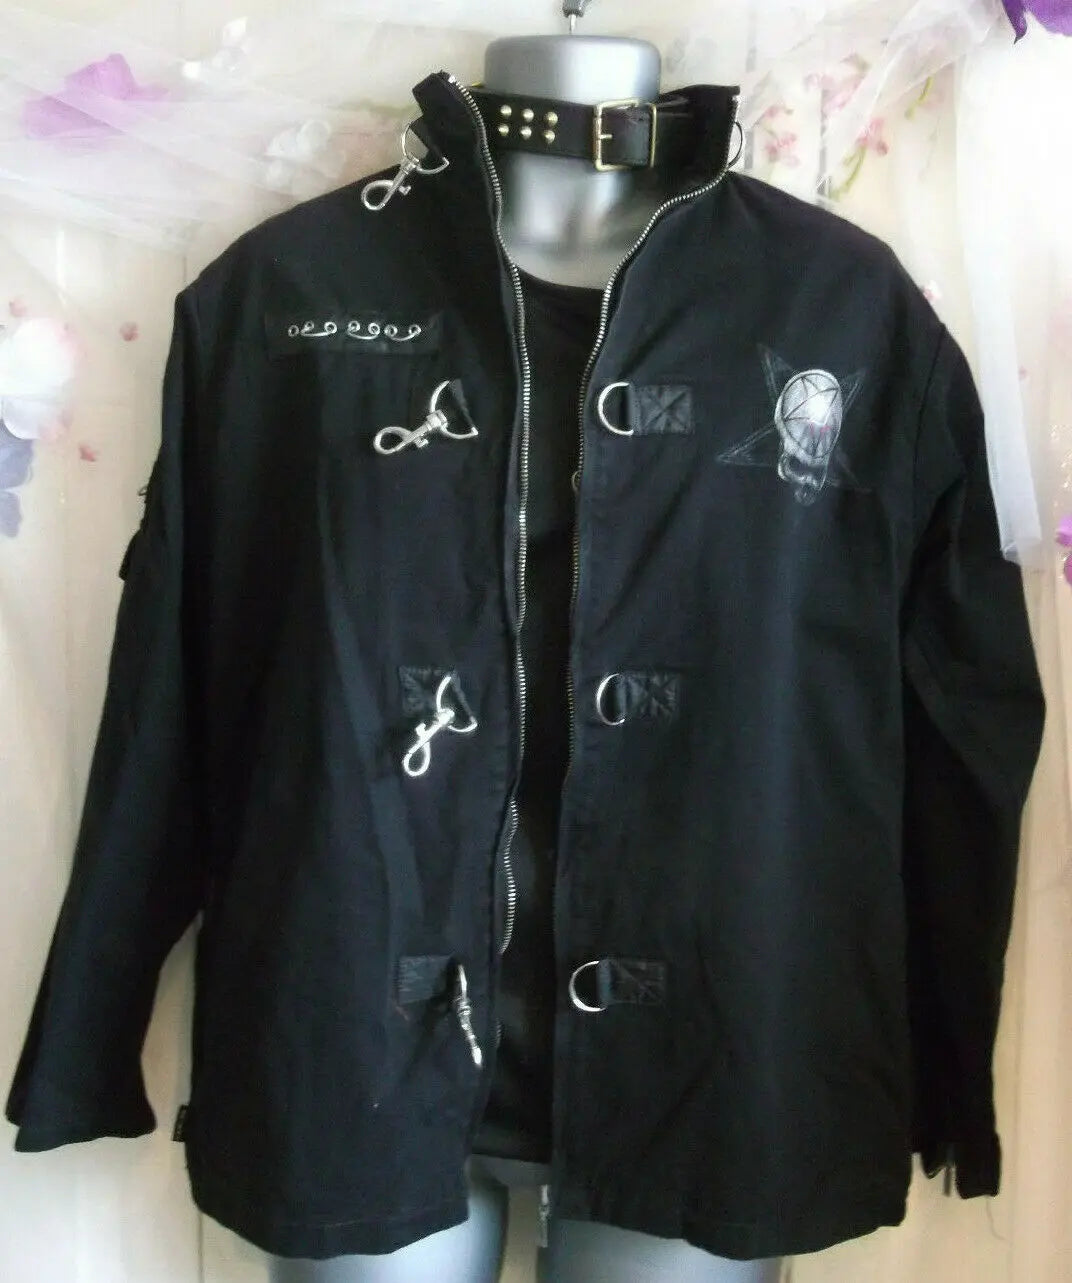 punk/goth Spiral goth black jacket with full size print on back. Size Medium Spiral